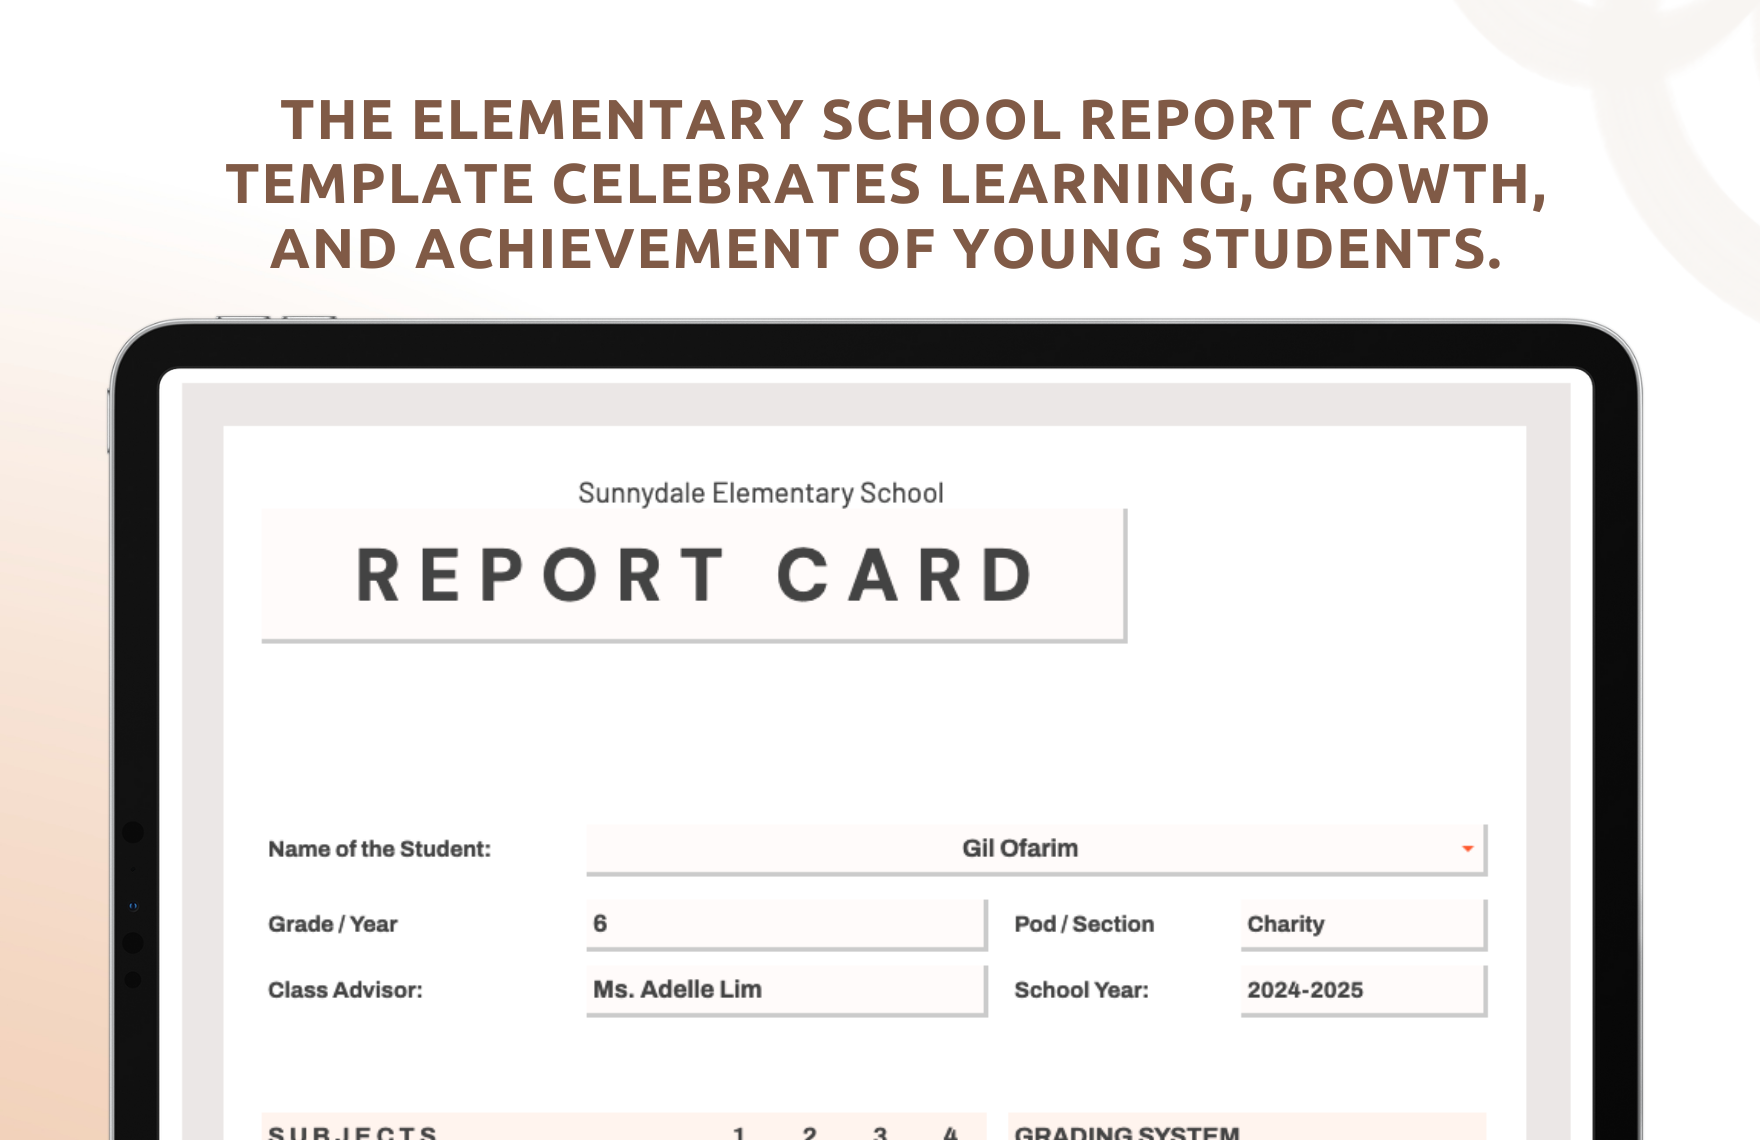 Elementary School Report Card Template